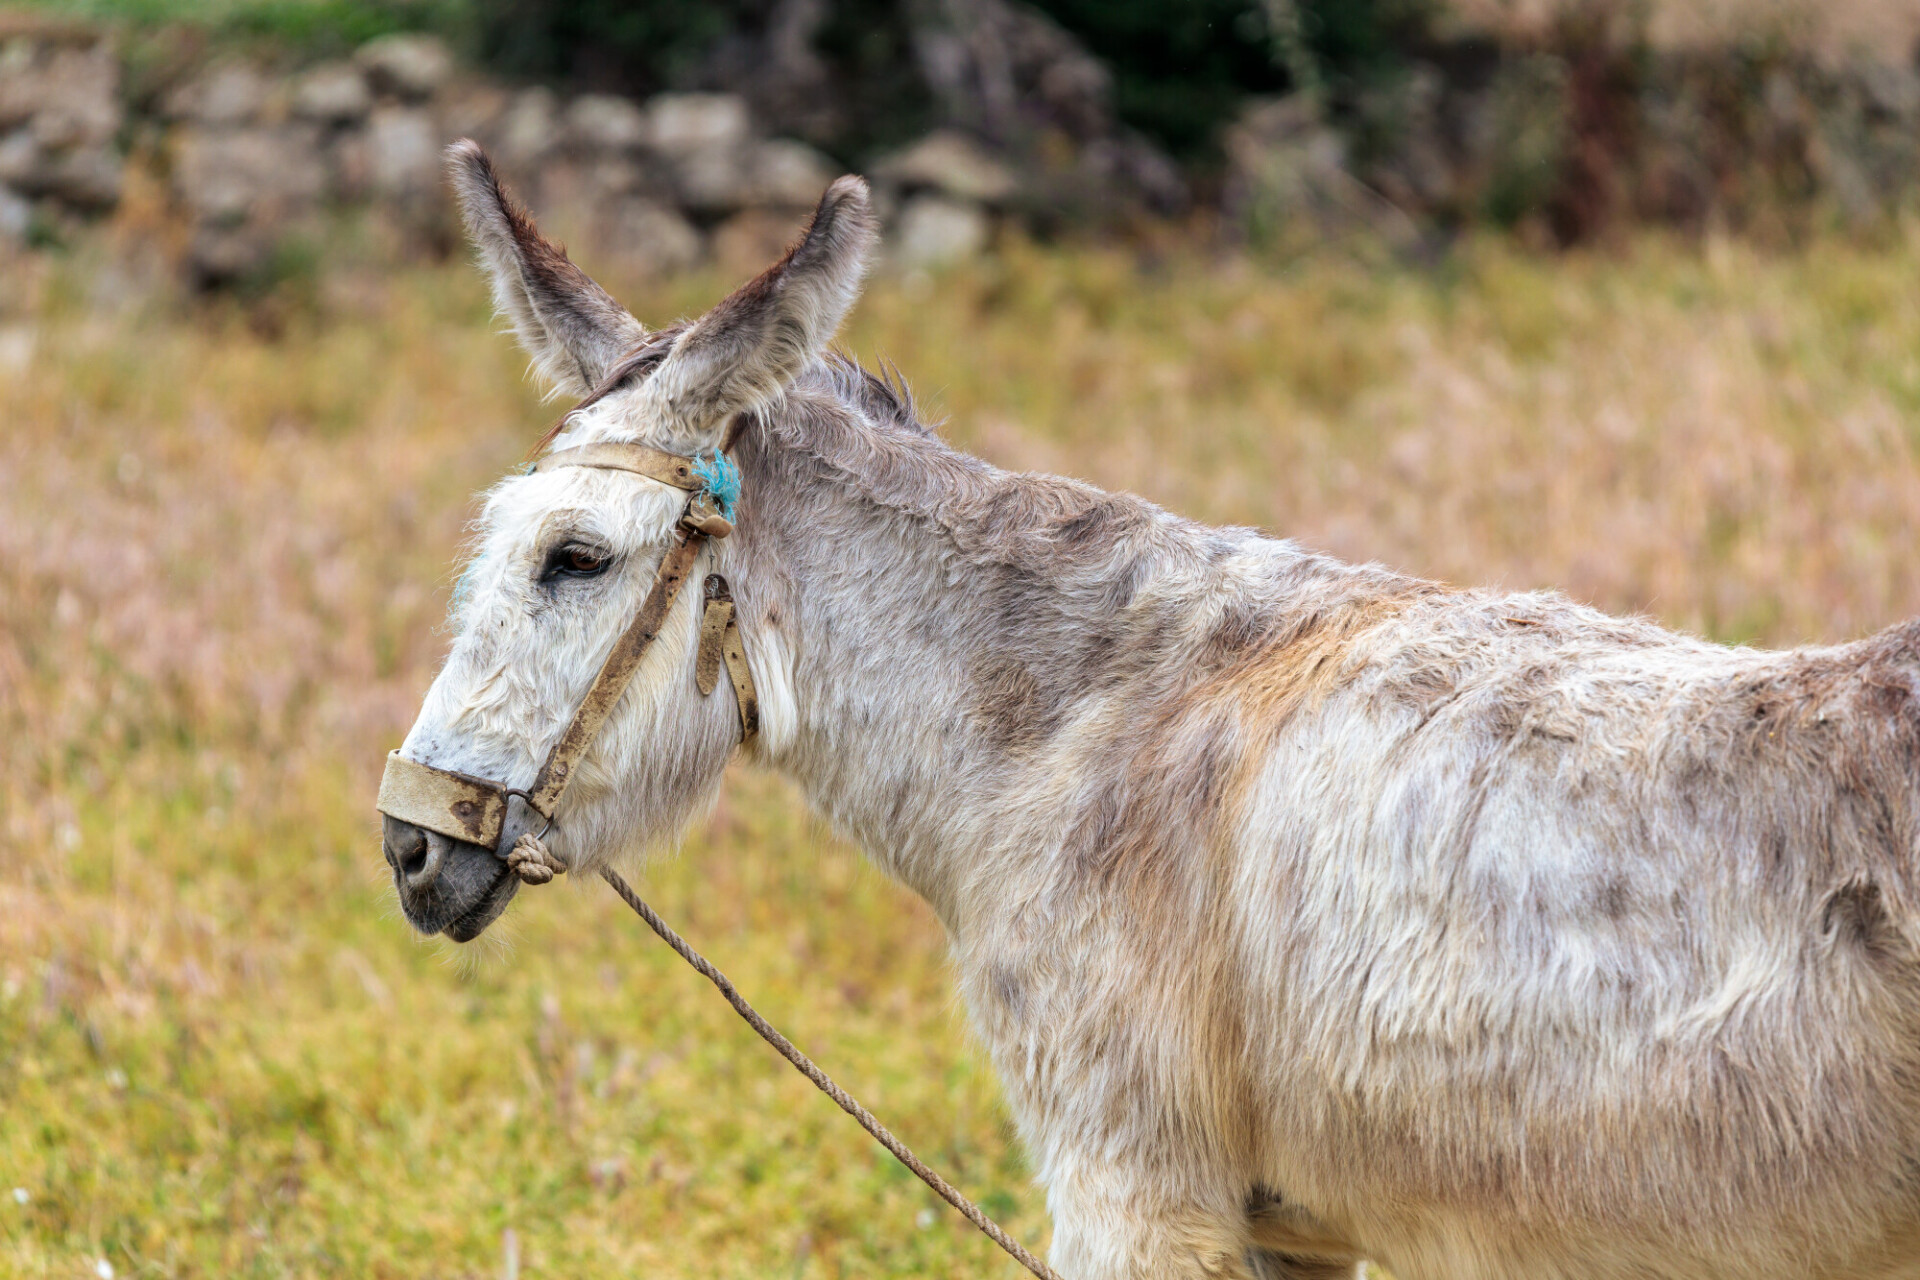 Graceful Serenity: Portrait of a White Portuguese Donkey